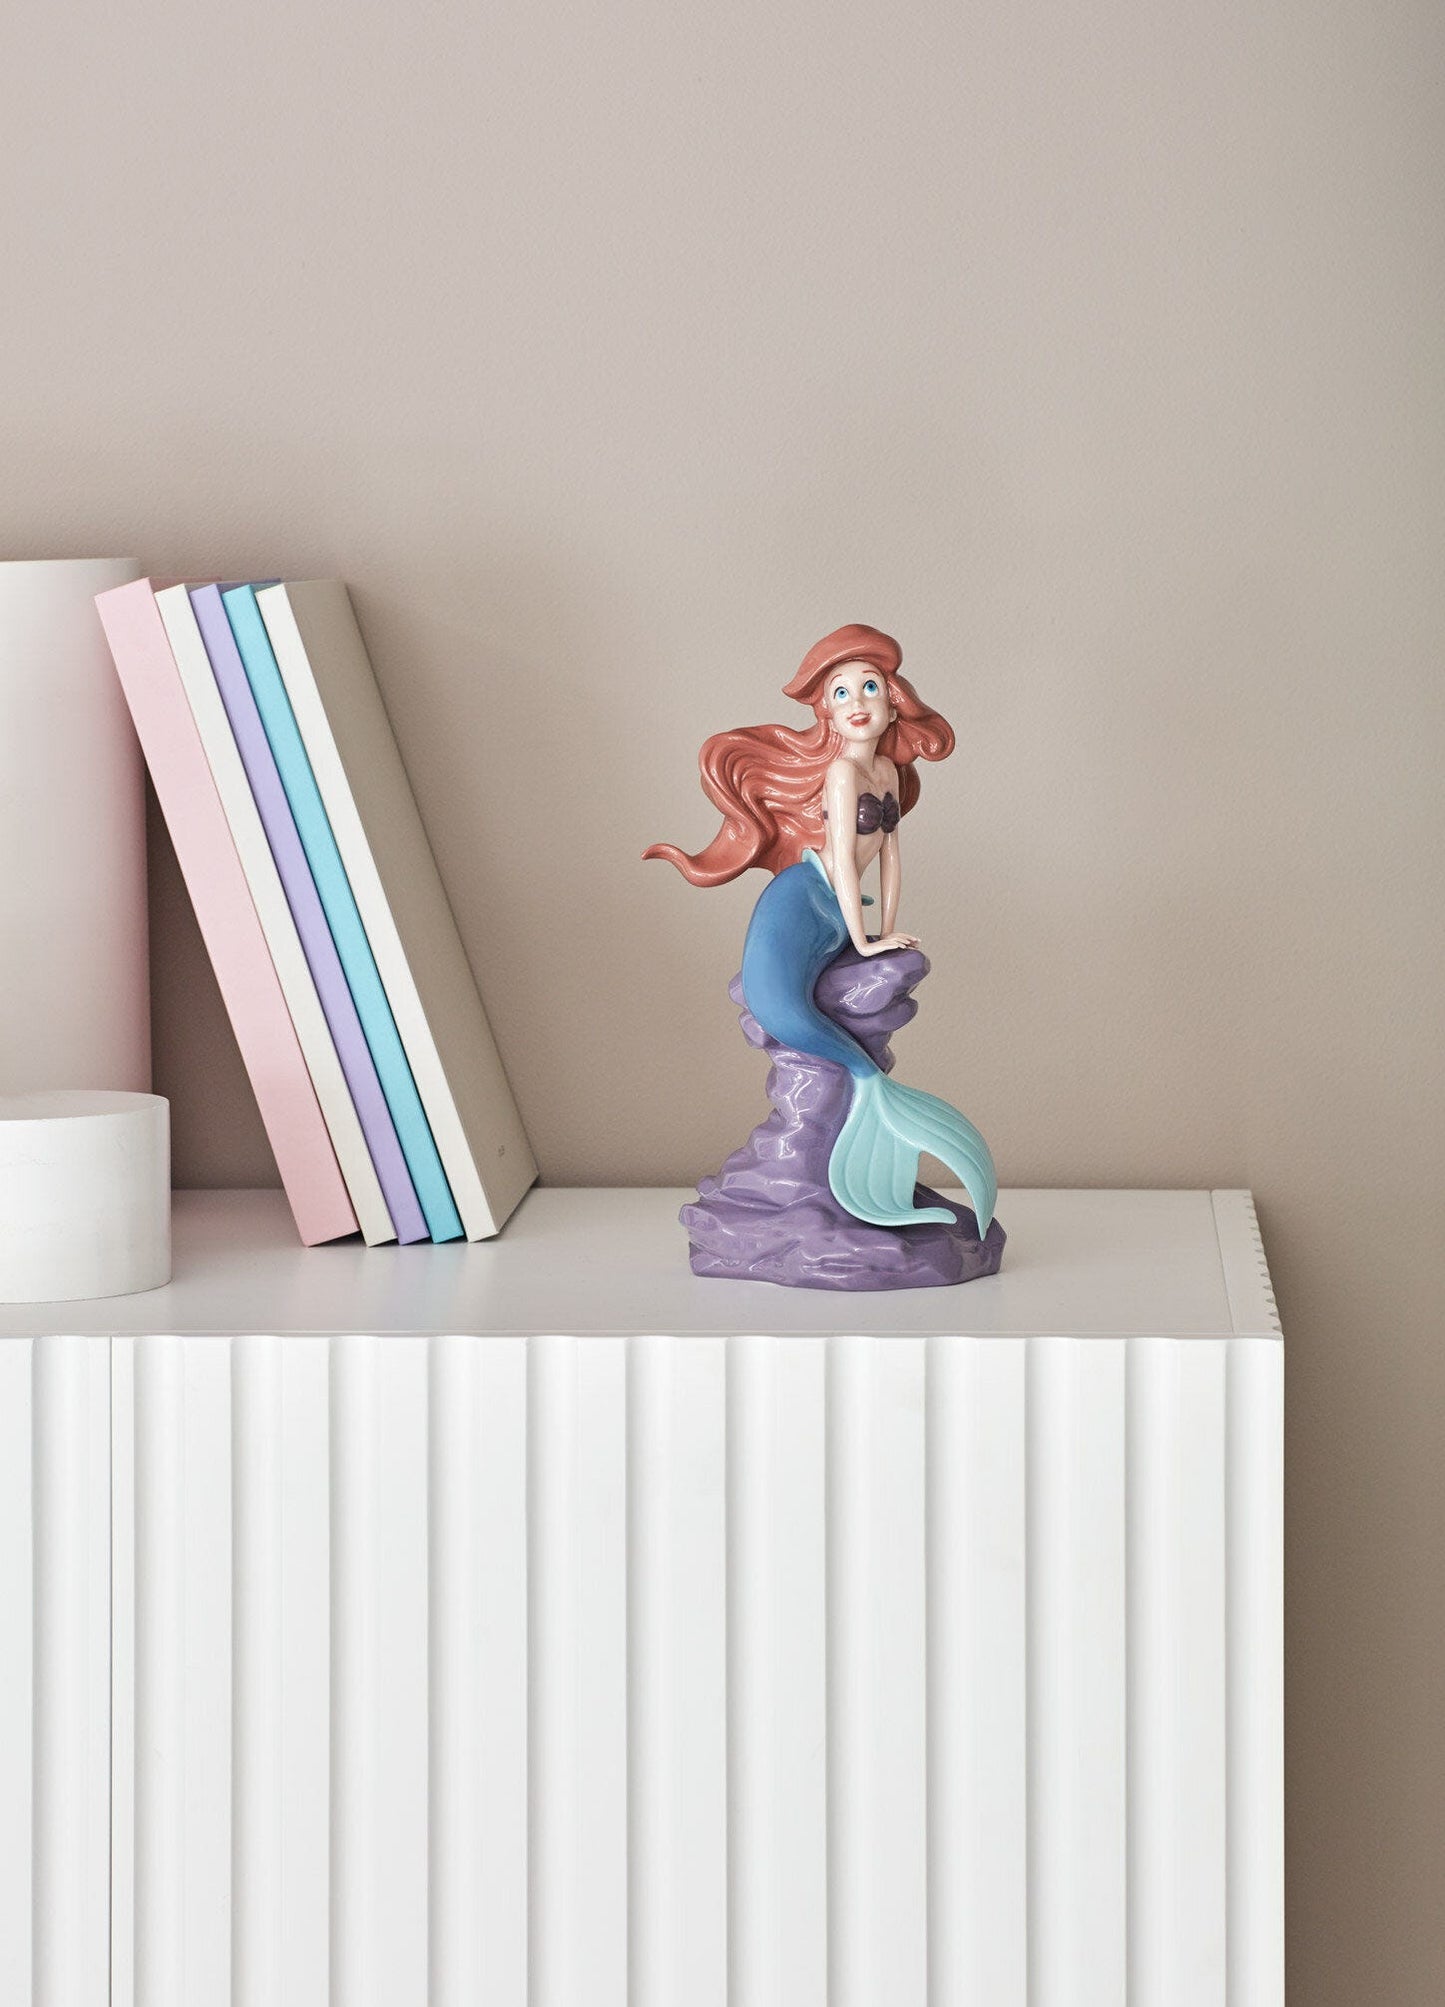 Official Ariel, The Little Mermaid figurine